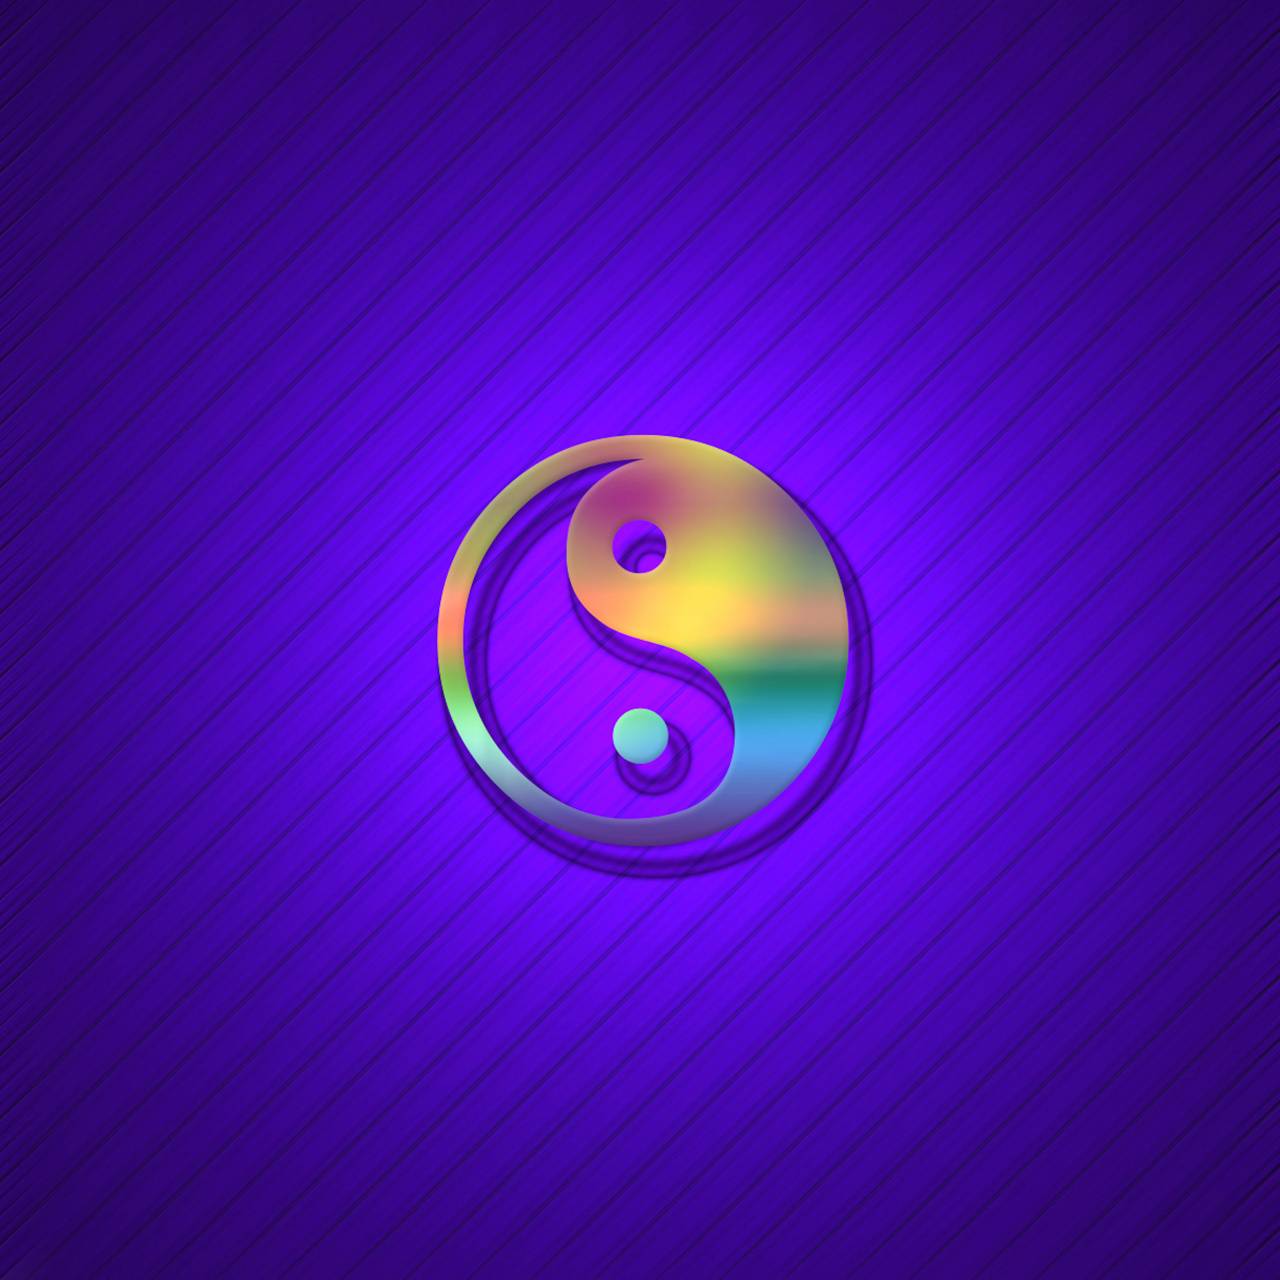 Yin Yang Symbol Wallpapers - Top Free Yin Yang Symbol Backgrounds